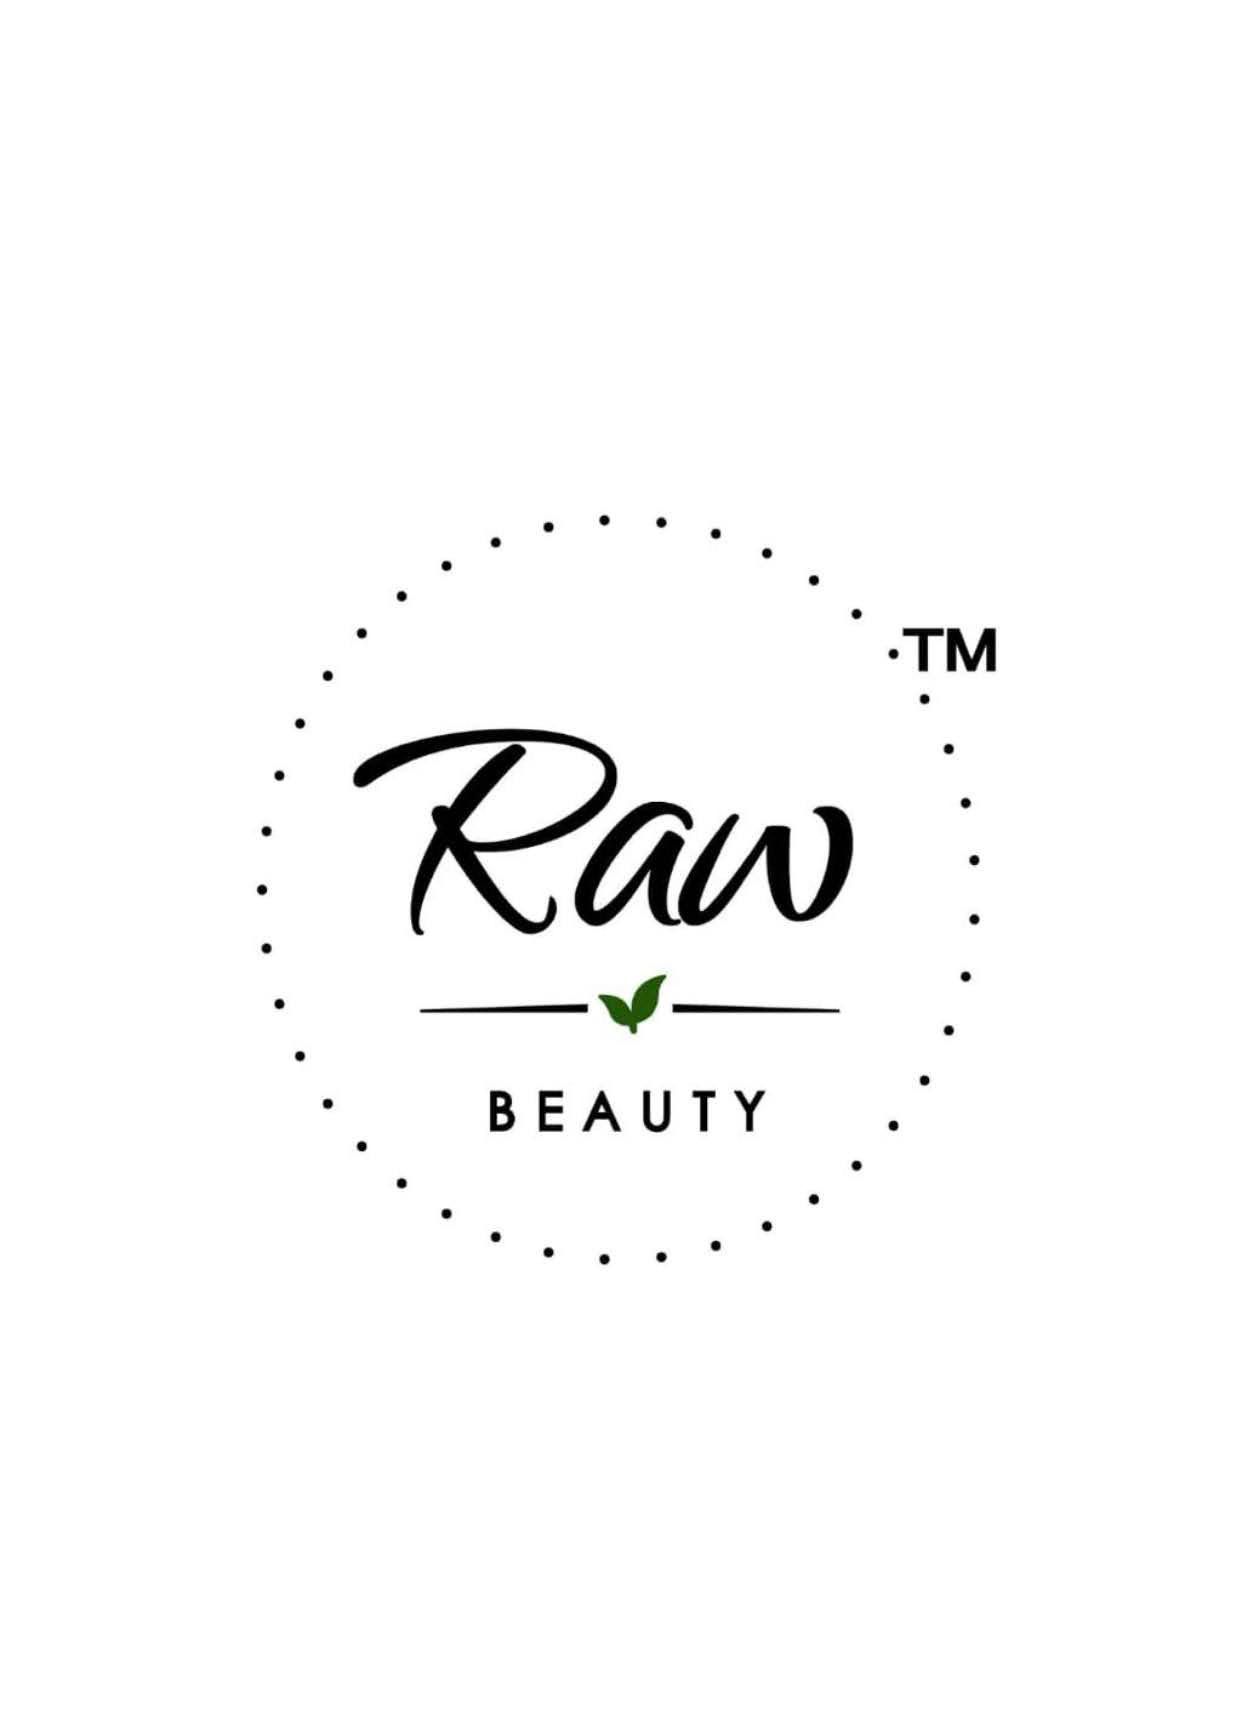 Raw Beauty Ltd